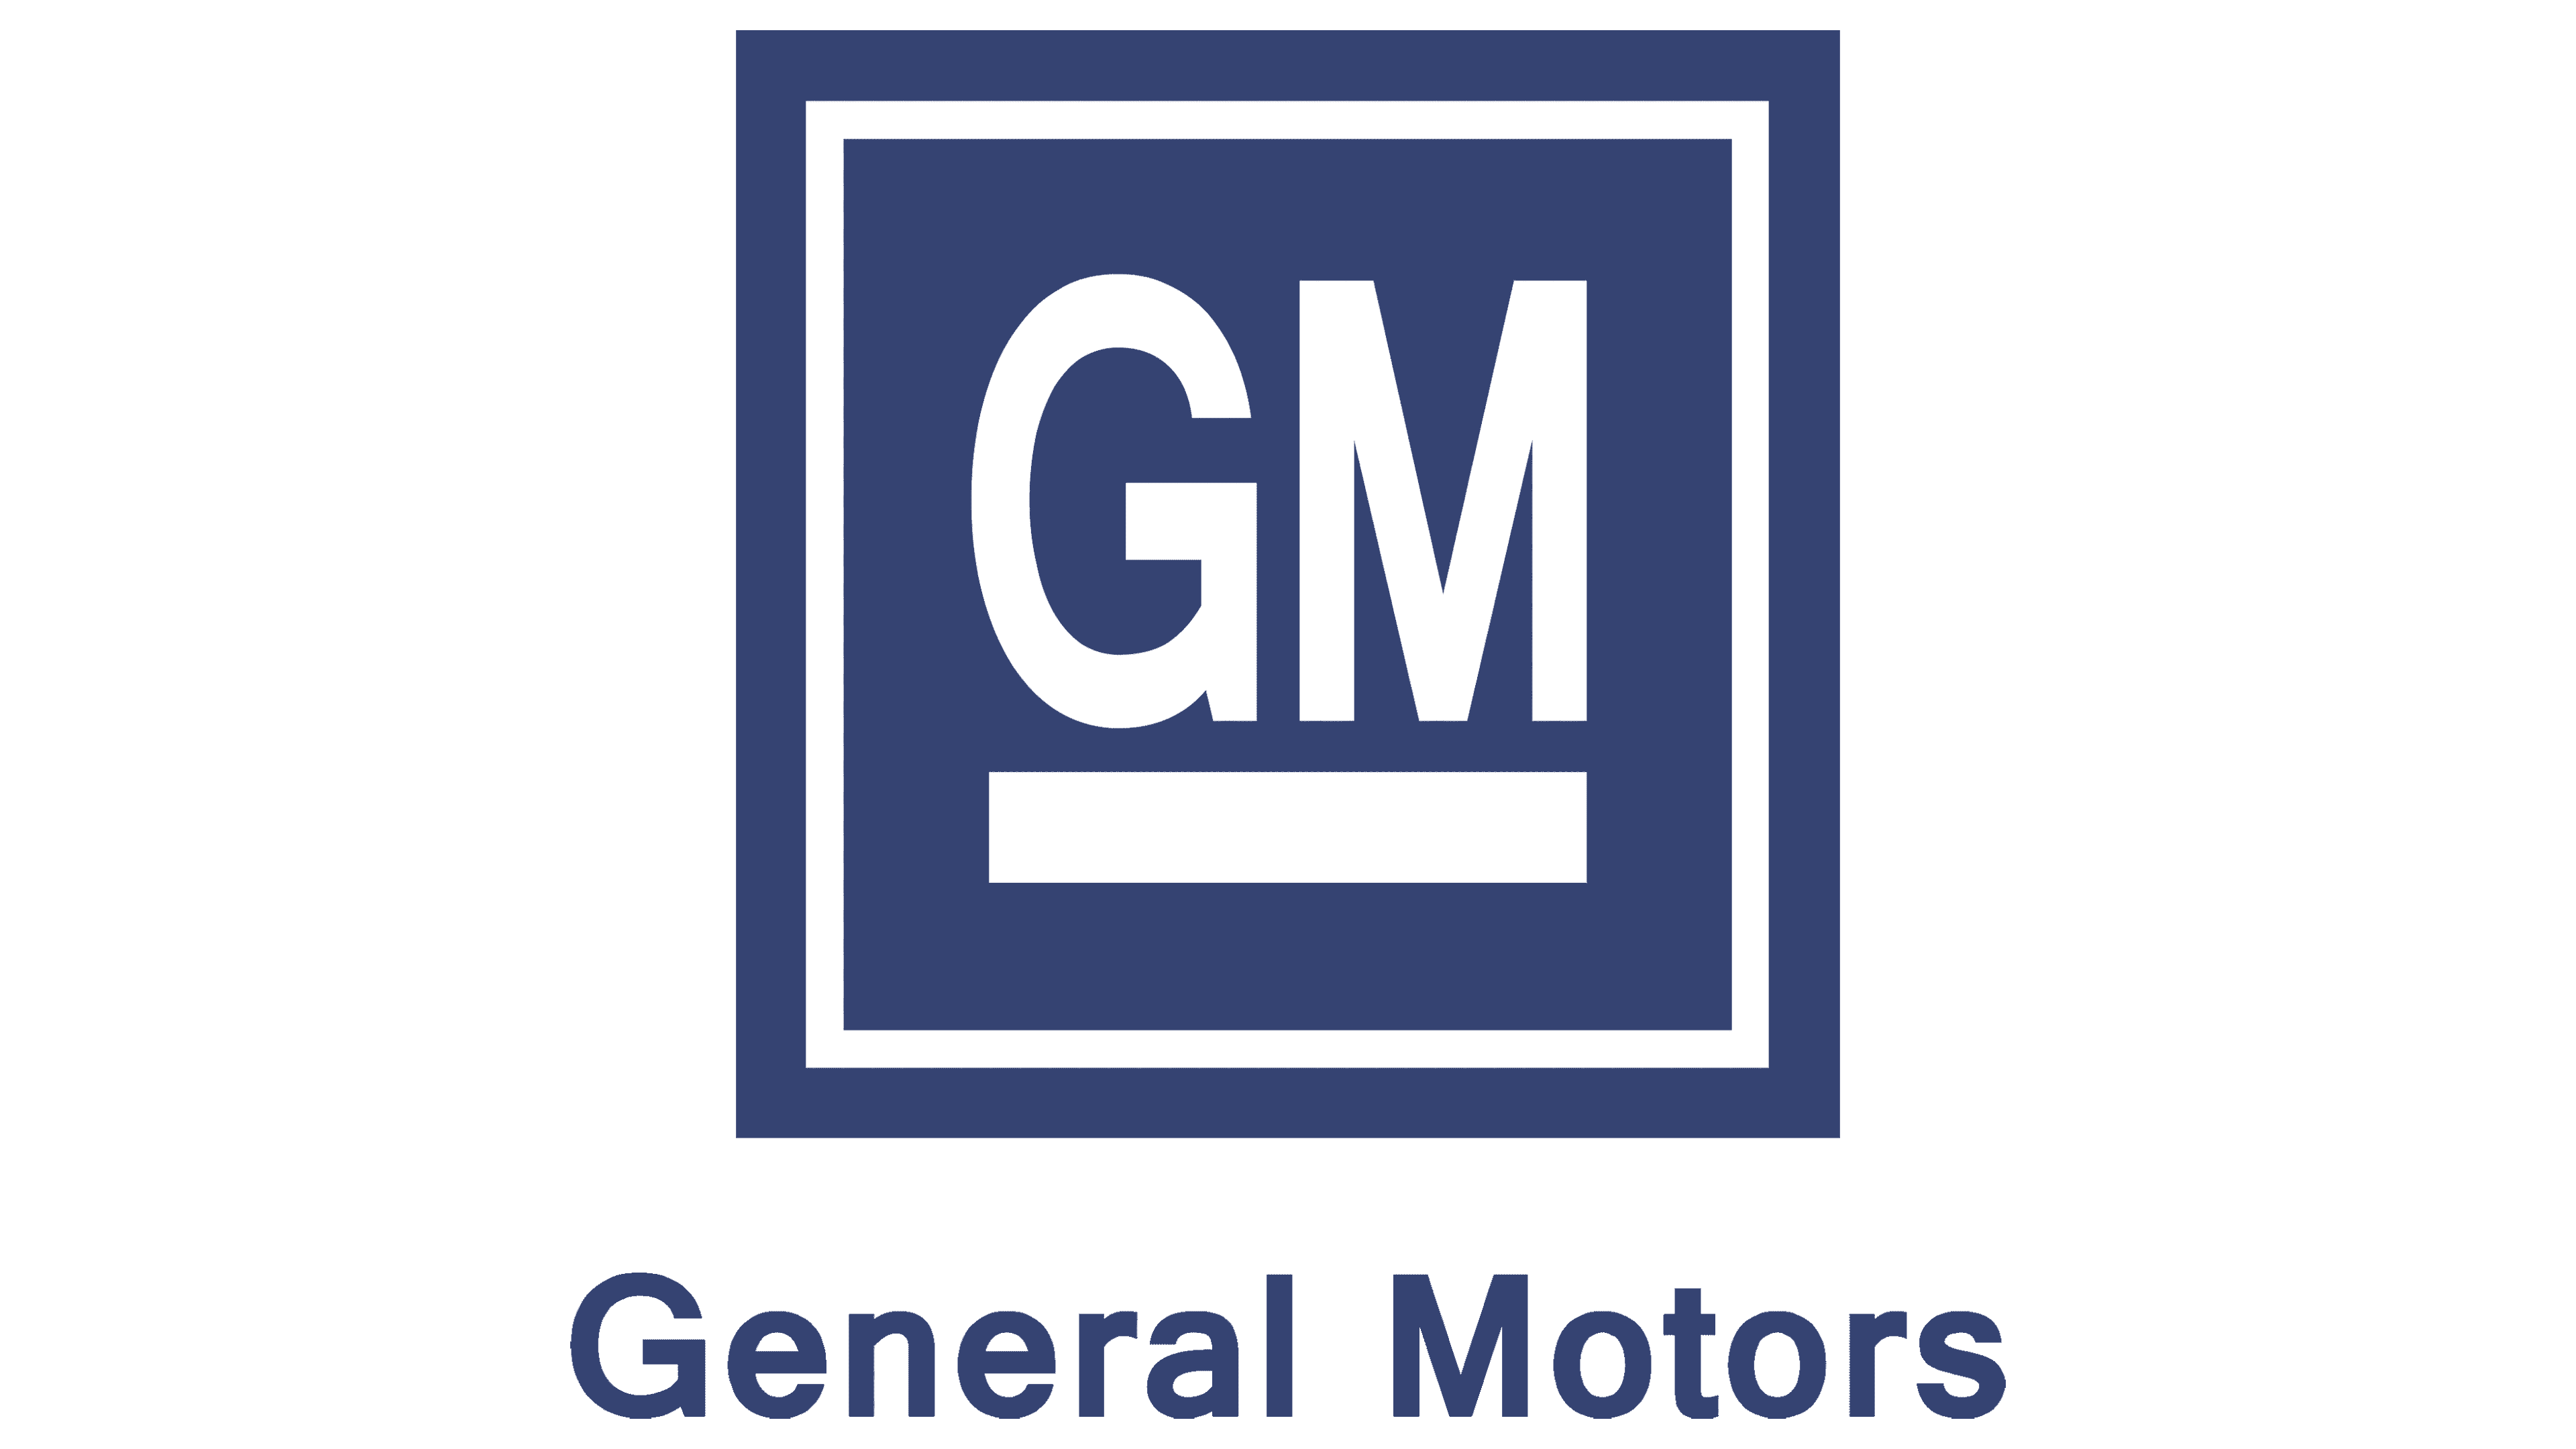 G M GM MG Letter Monogram Initial Logo Graphic by Nuriyanto51 · Creative  Fabrica